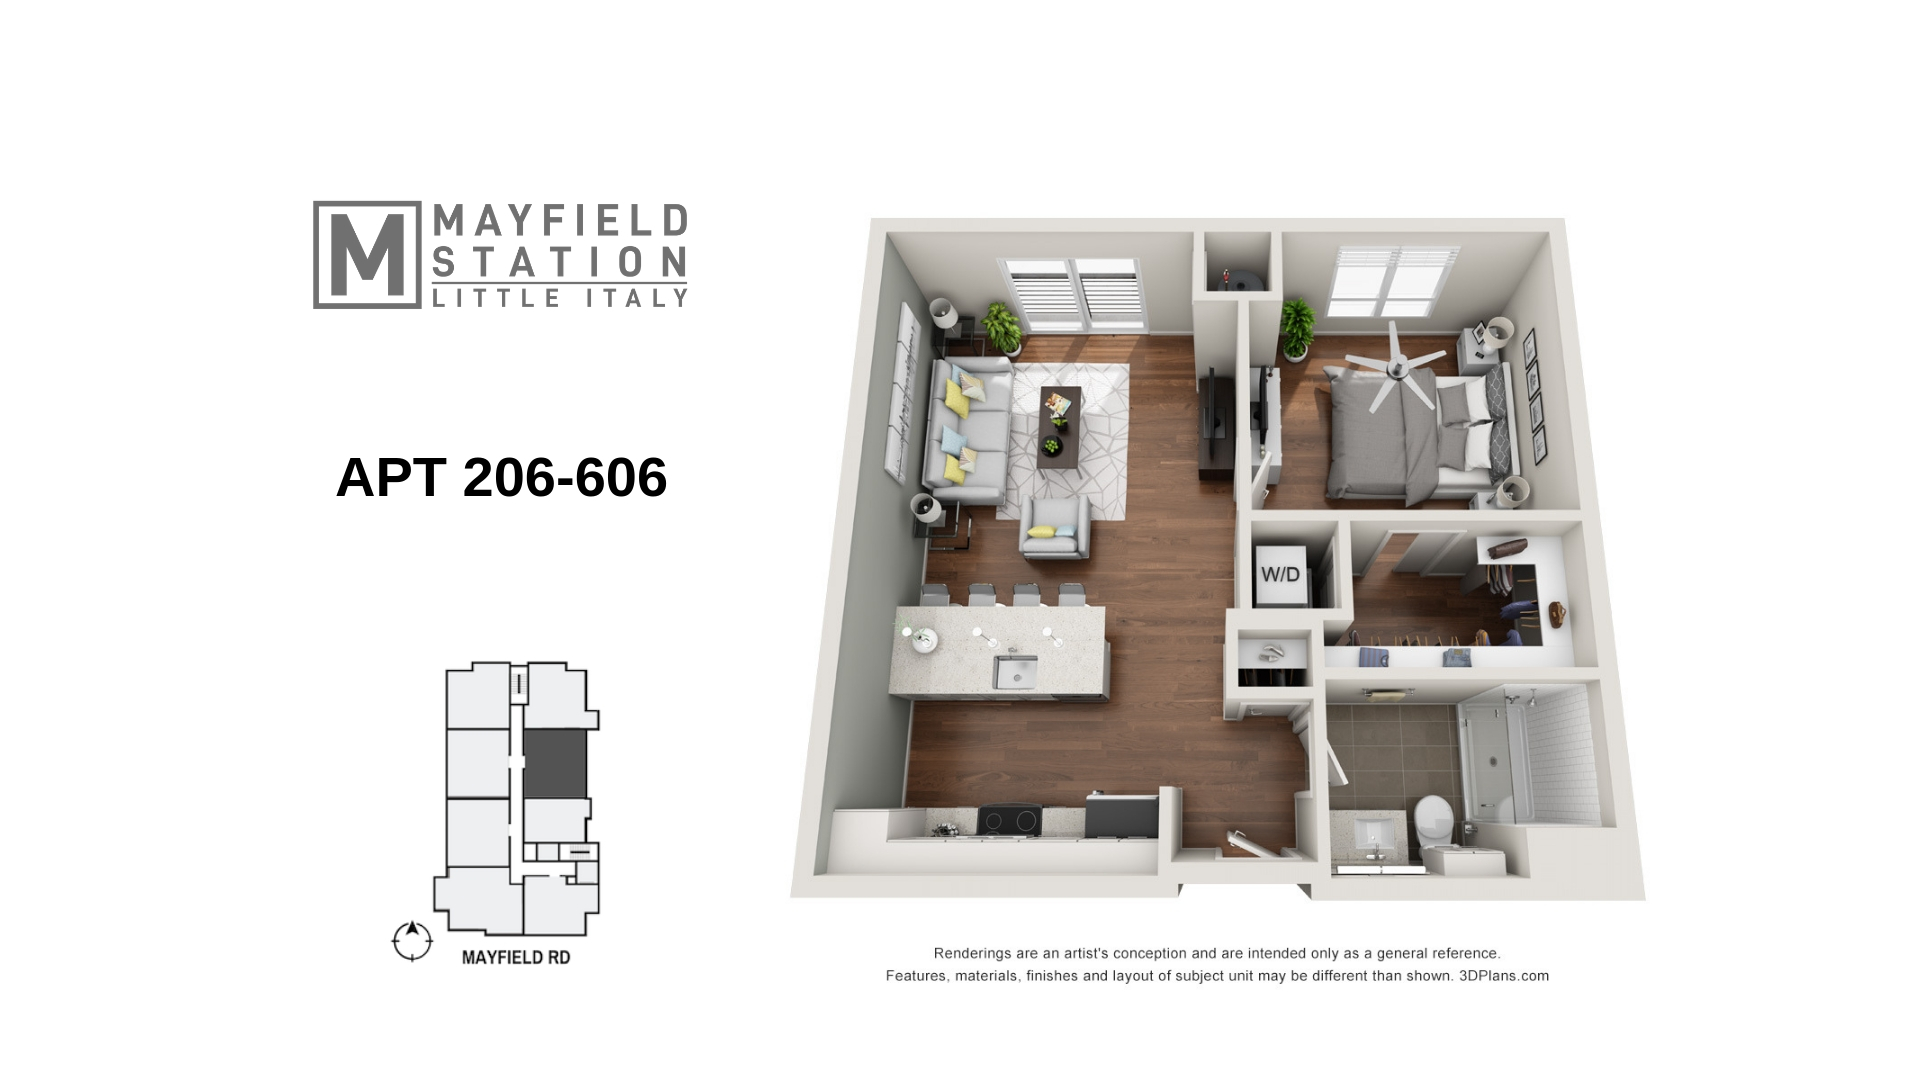 Mayfield Station Apartments - Floorplan - APT 206-606